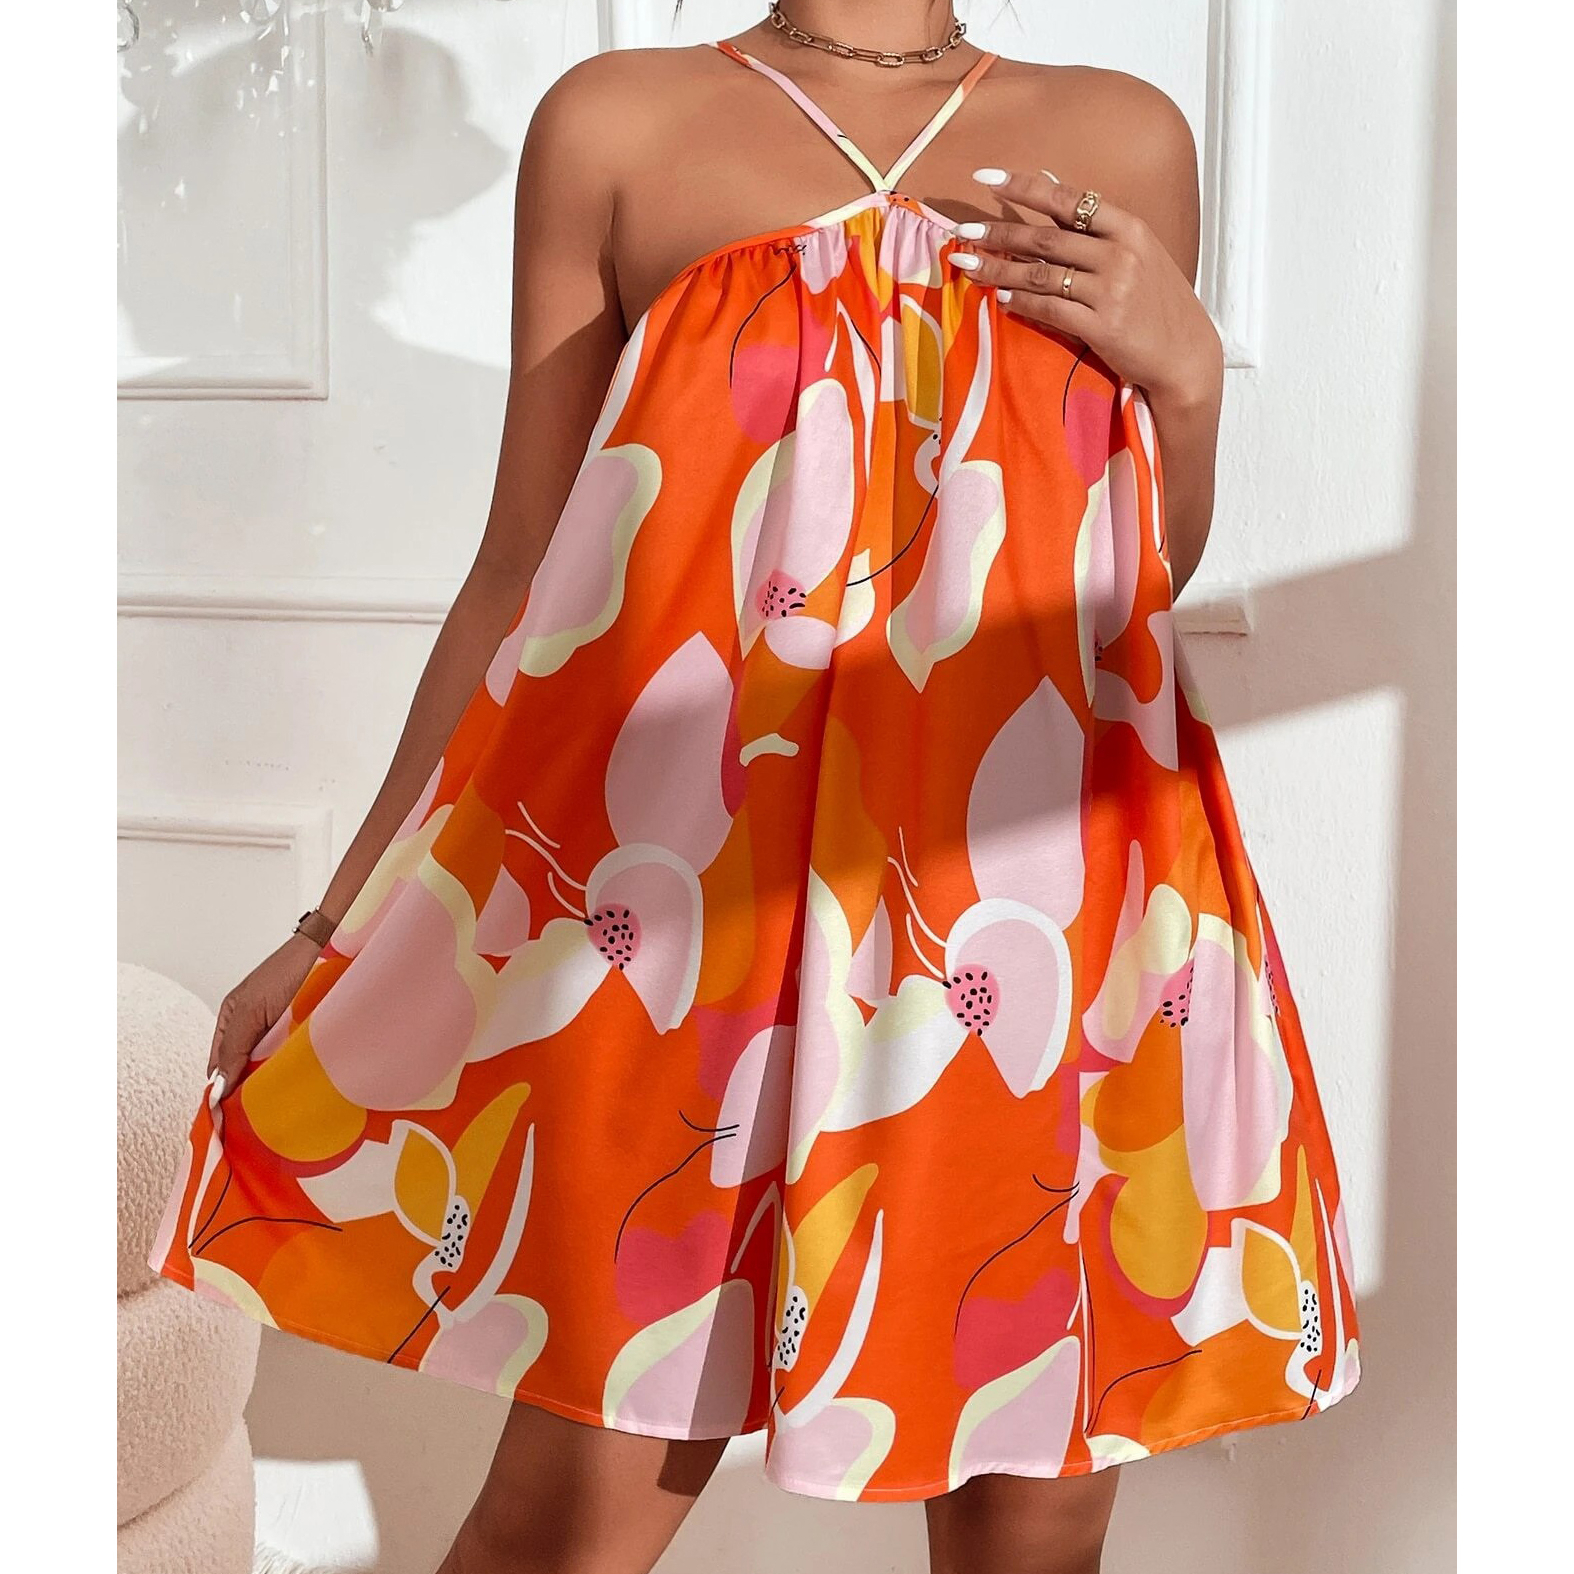 Allover Print Cami Dress - Multicolor, Large(8/10)